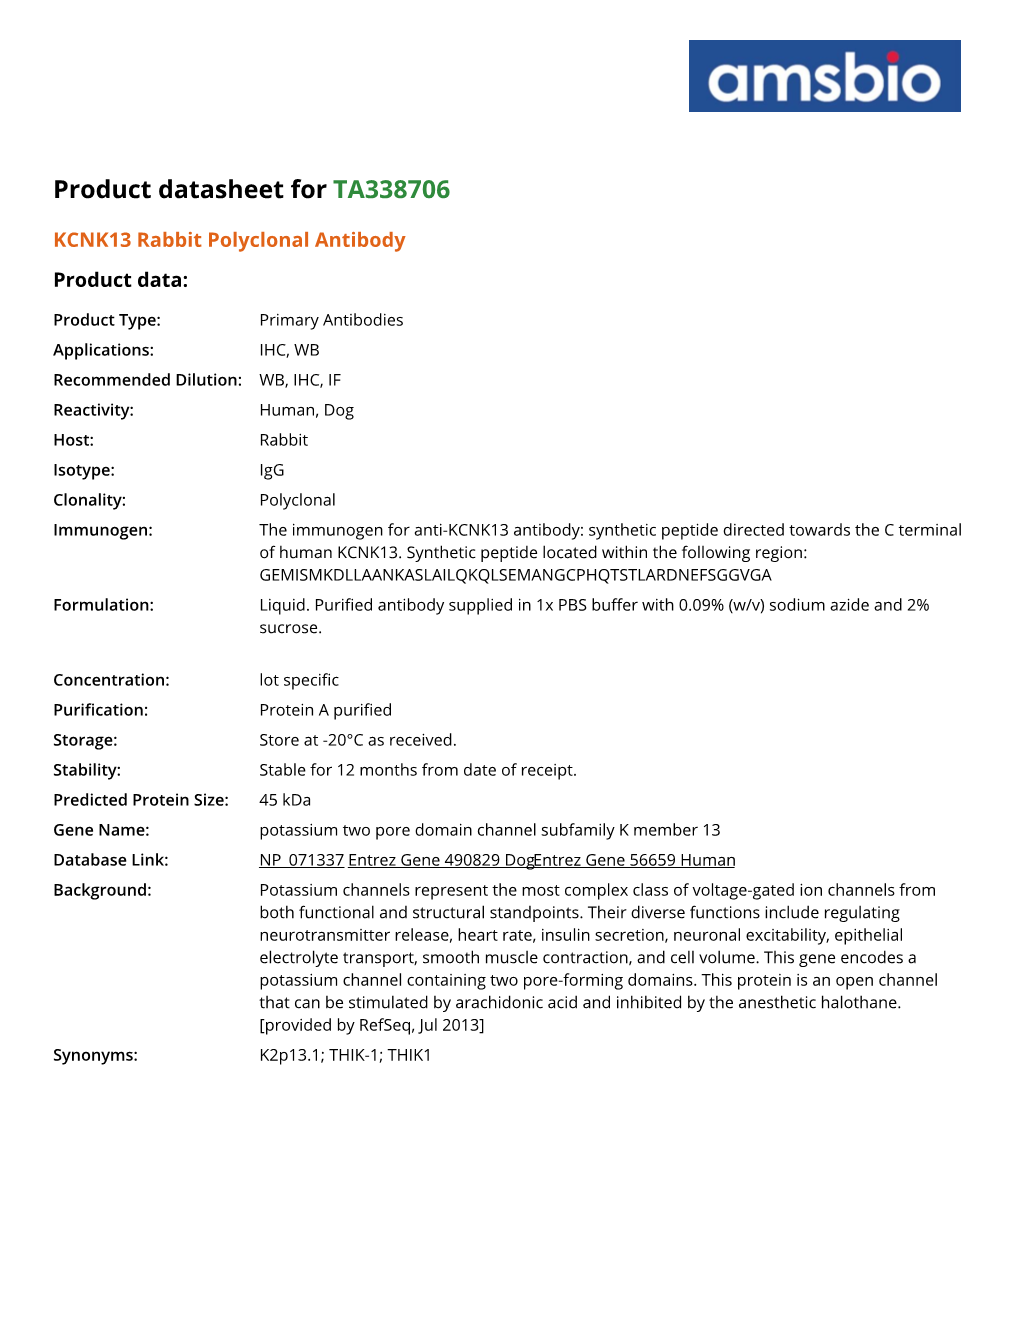 Product Datasheet for TA338706